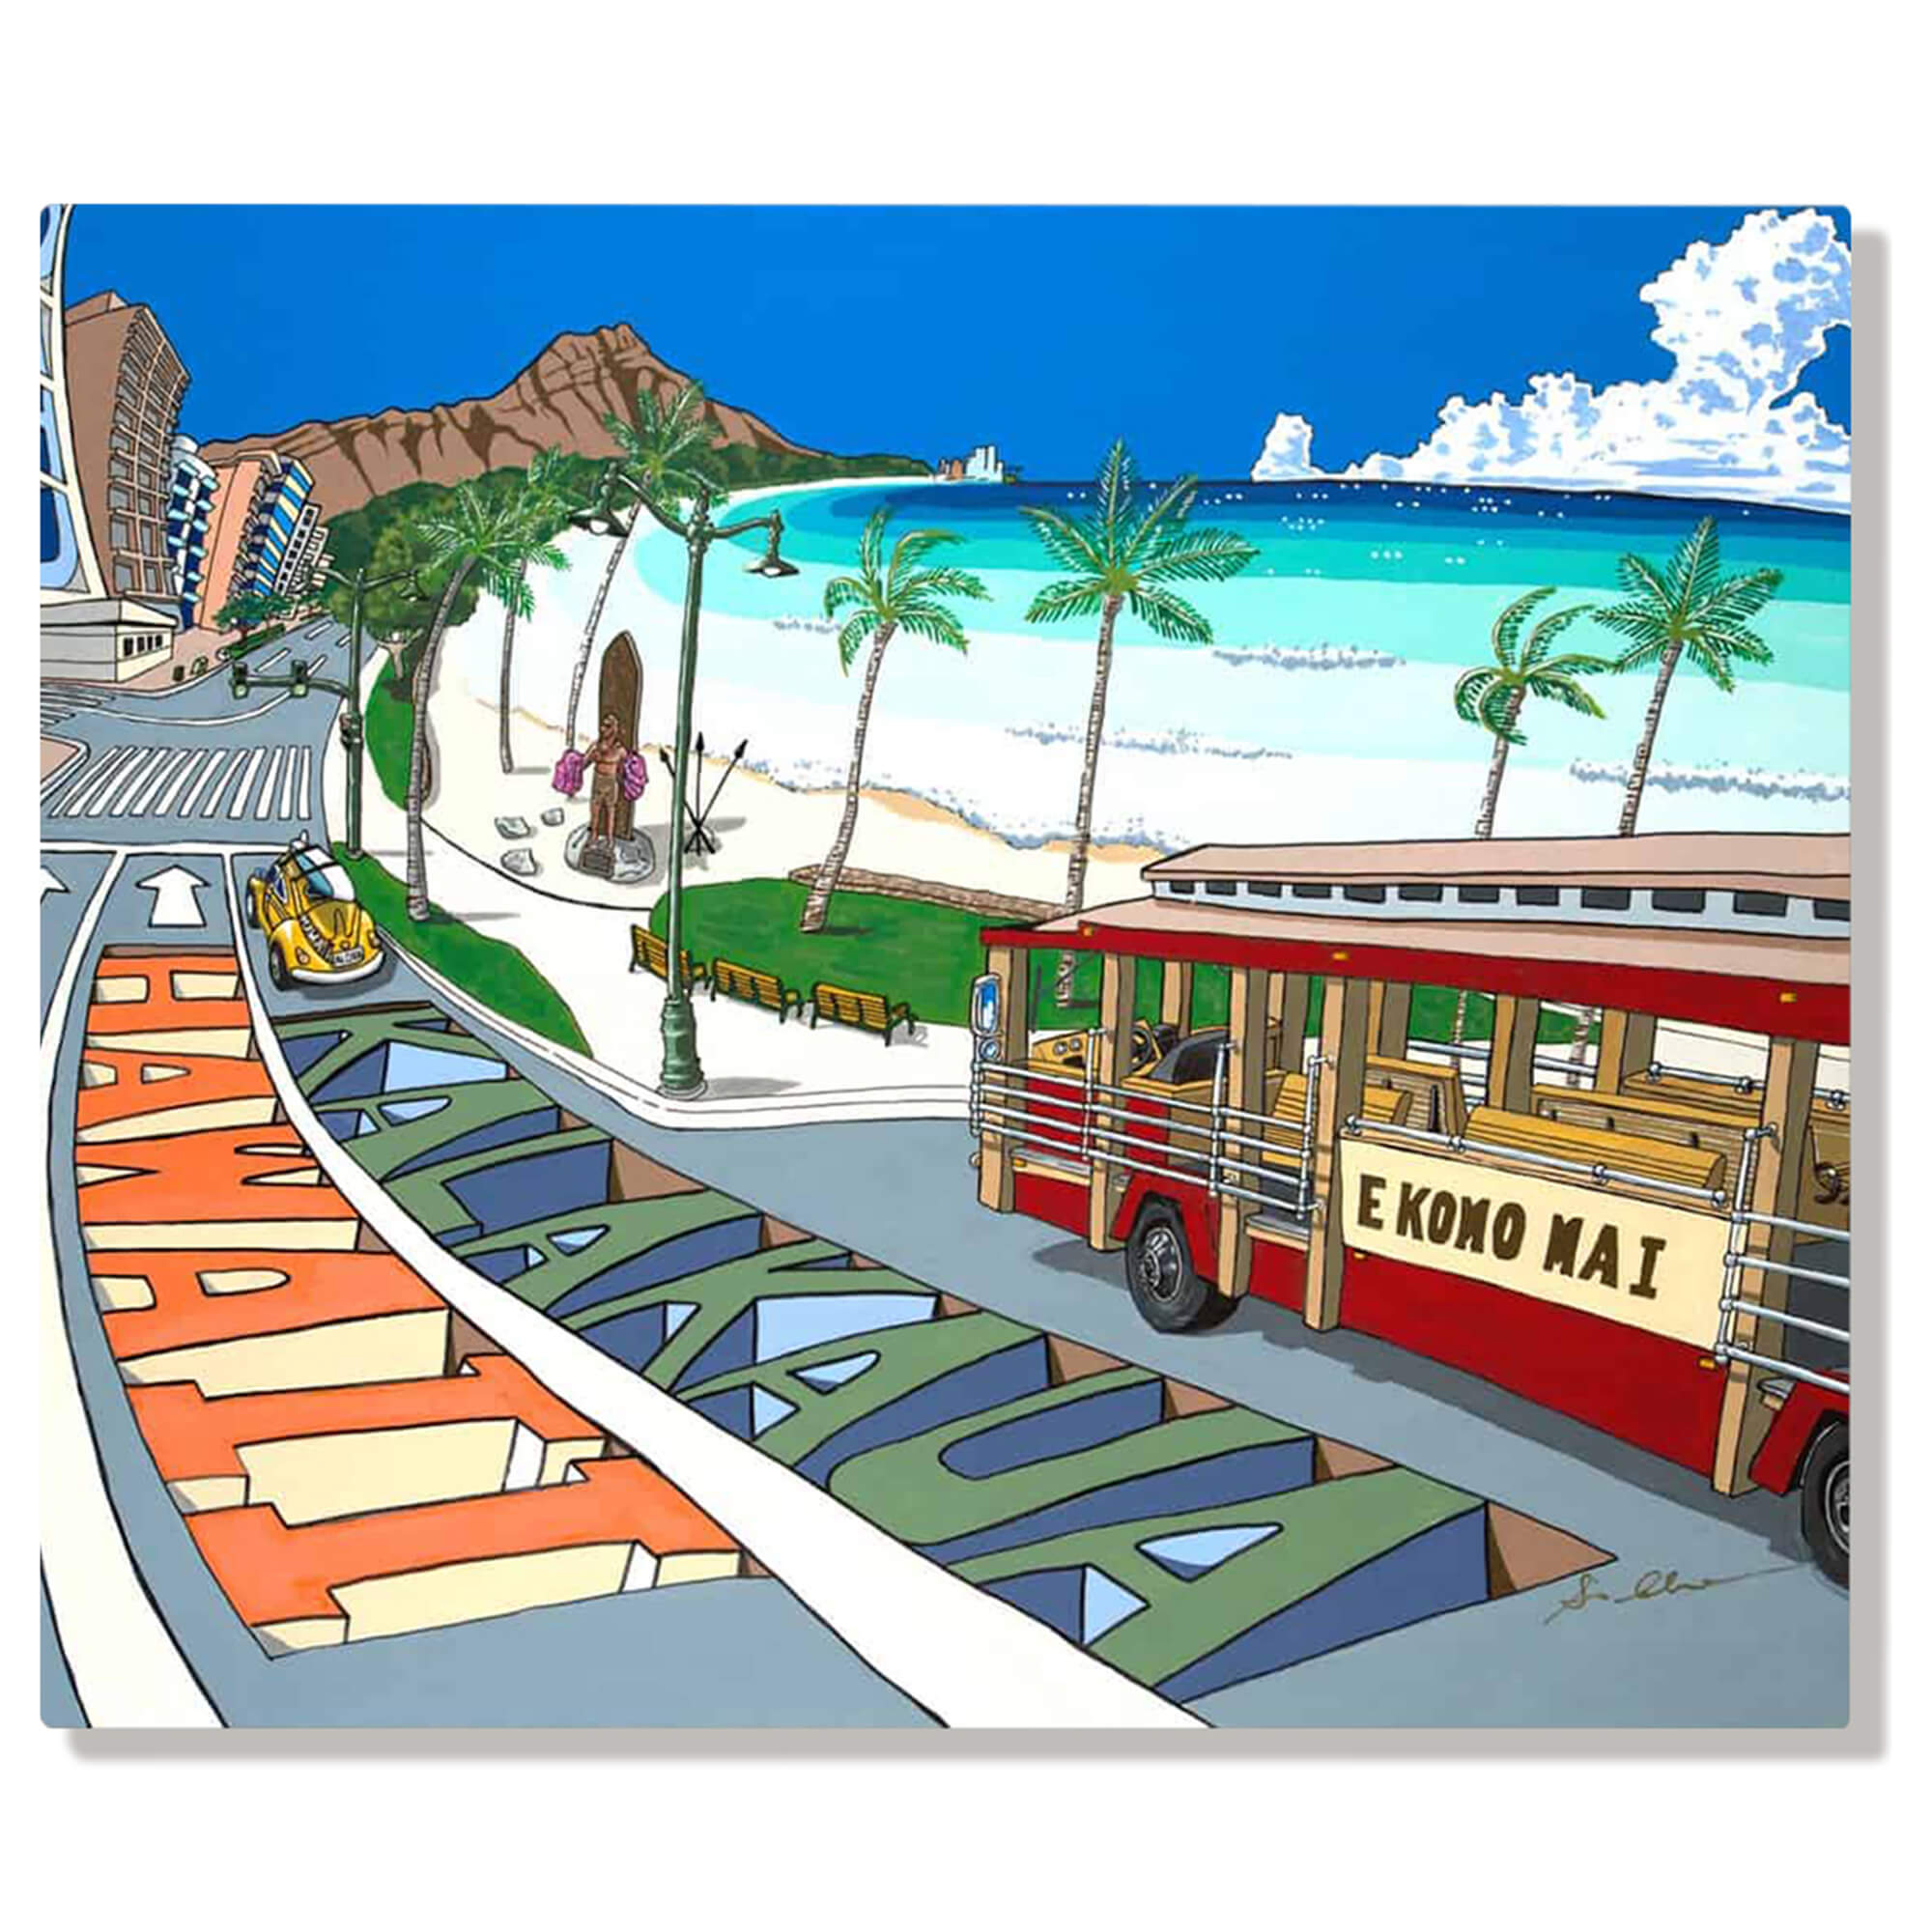 A metal art print of the popular street lining Waikiki Beach called Kalakaua Avenue with the famed Diamond Head crater in the backdrop by Hawaii artist Shin Kato